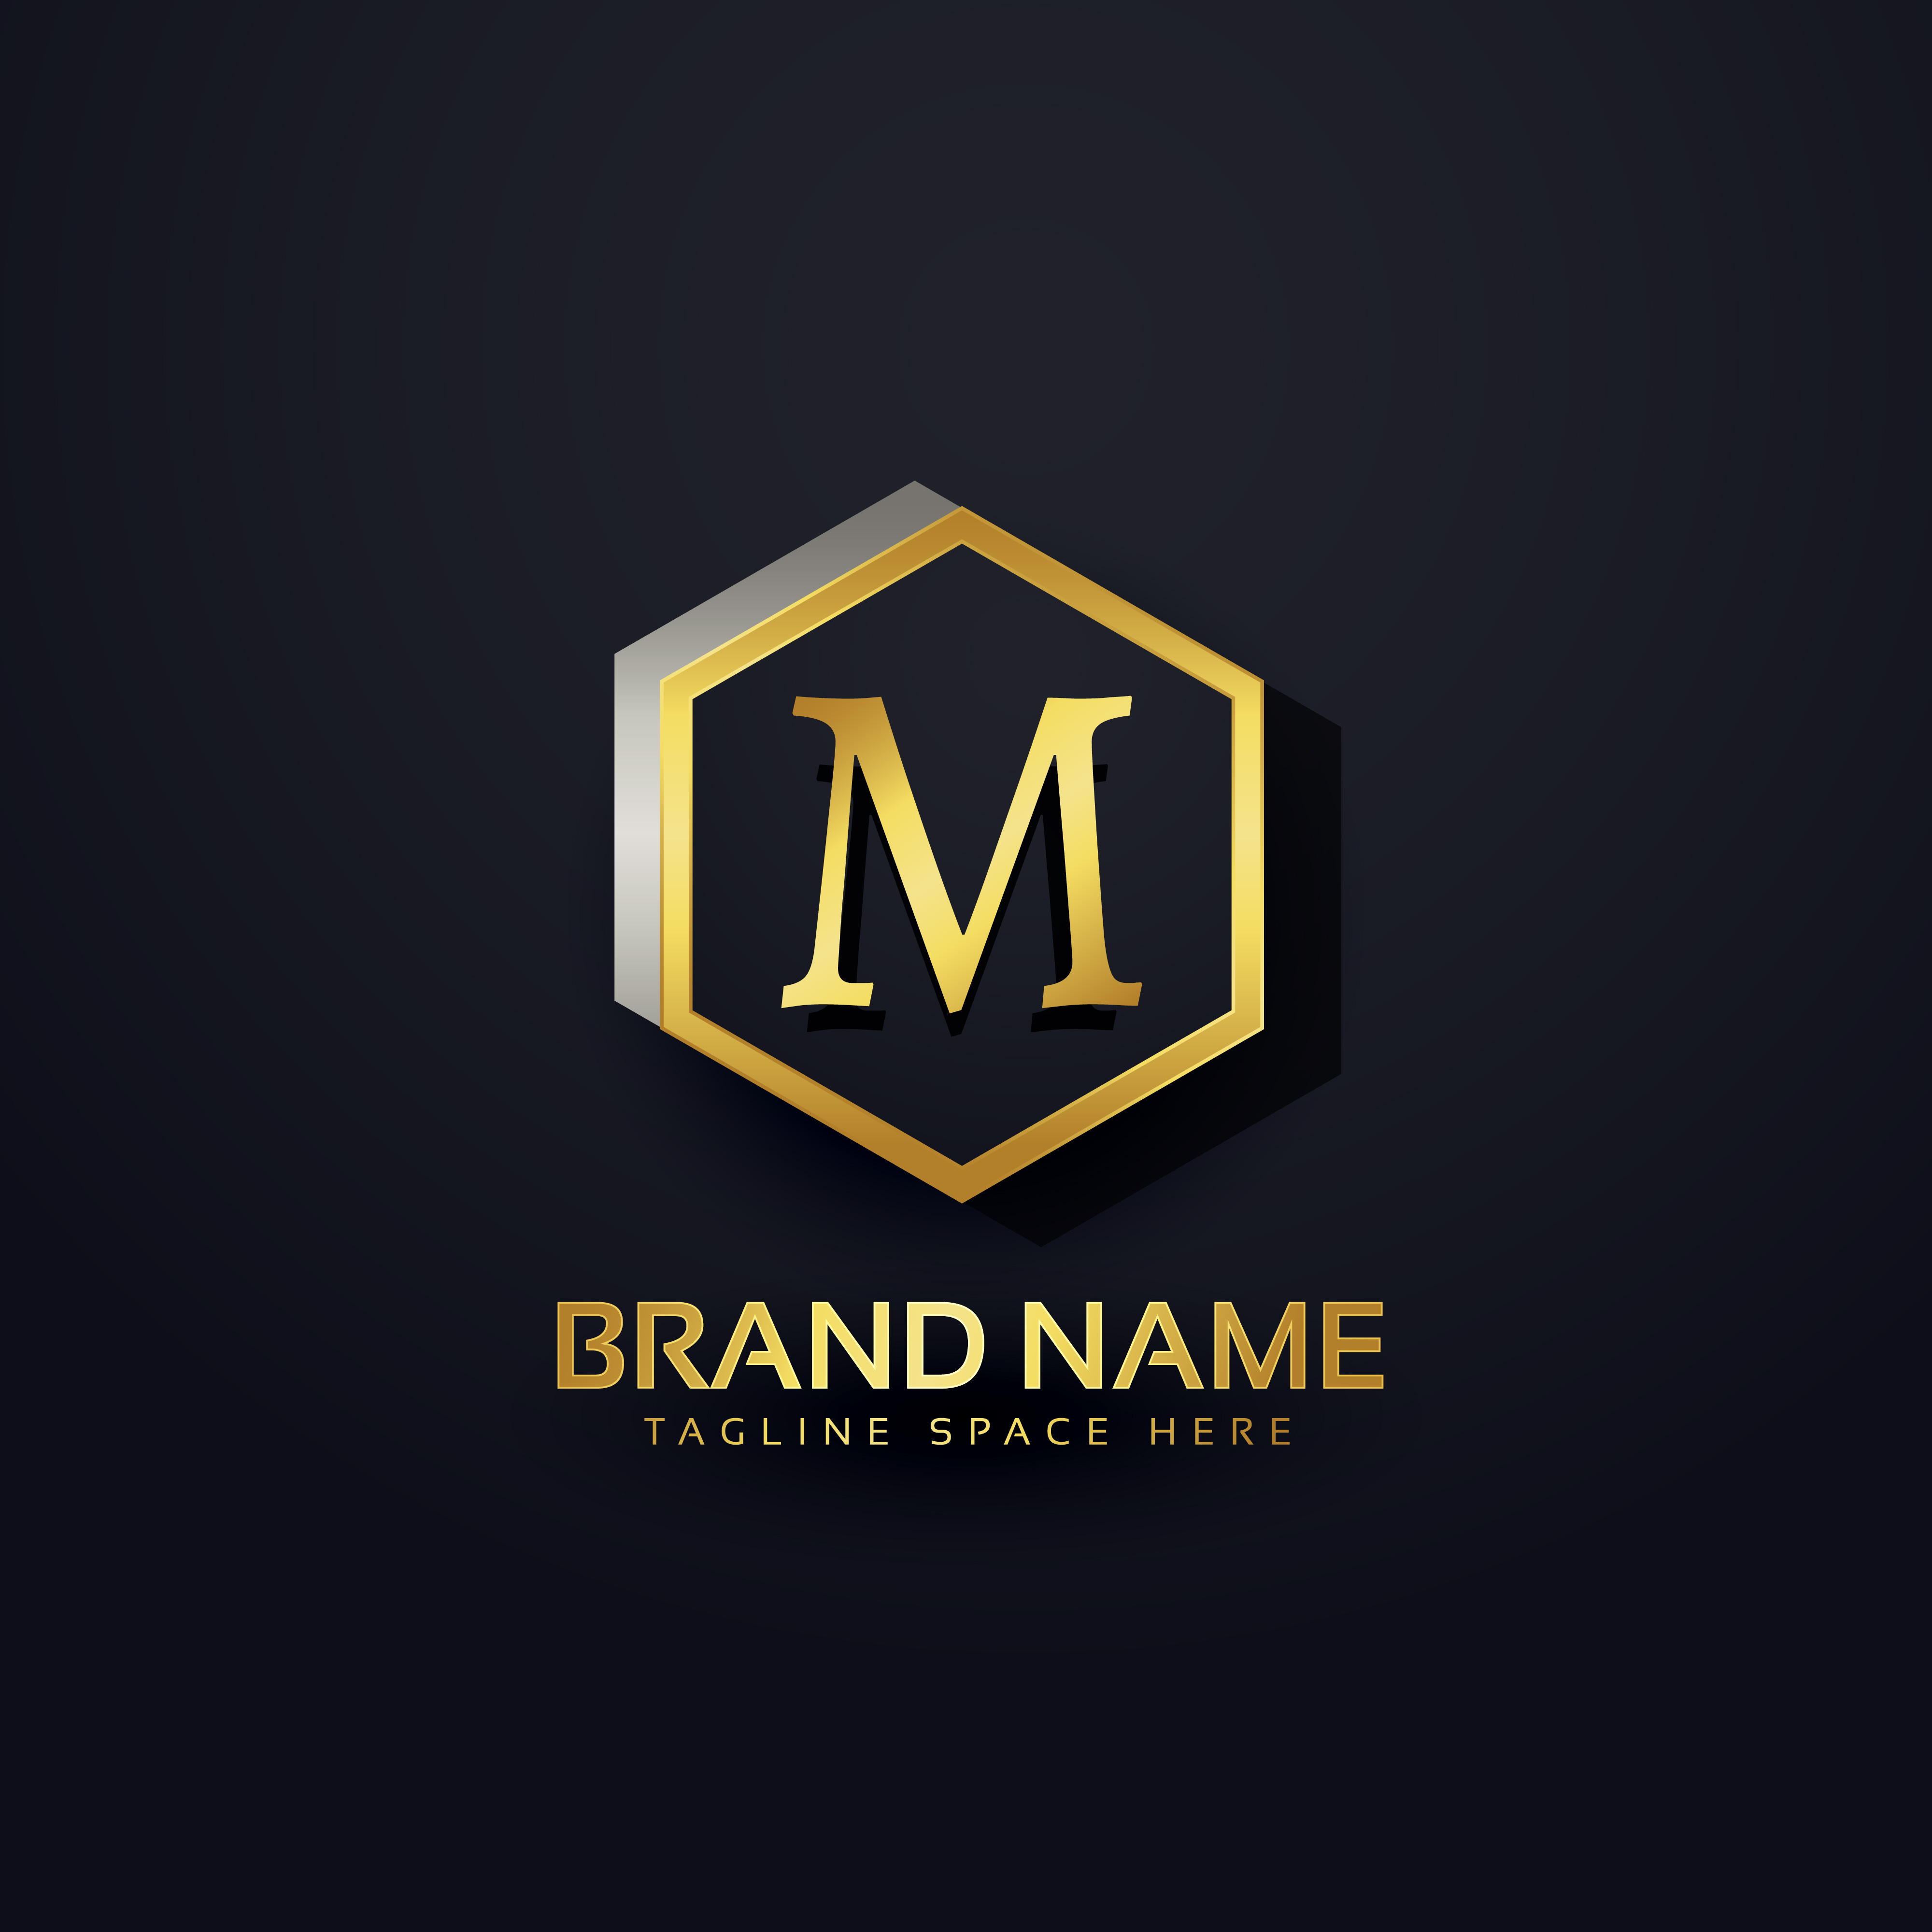 letter M logo premium design - Download Free Vector Art, Stock Graphics